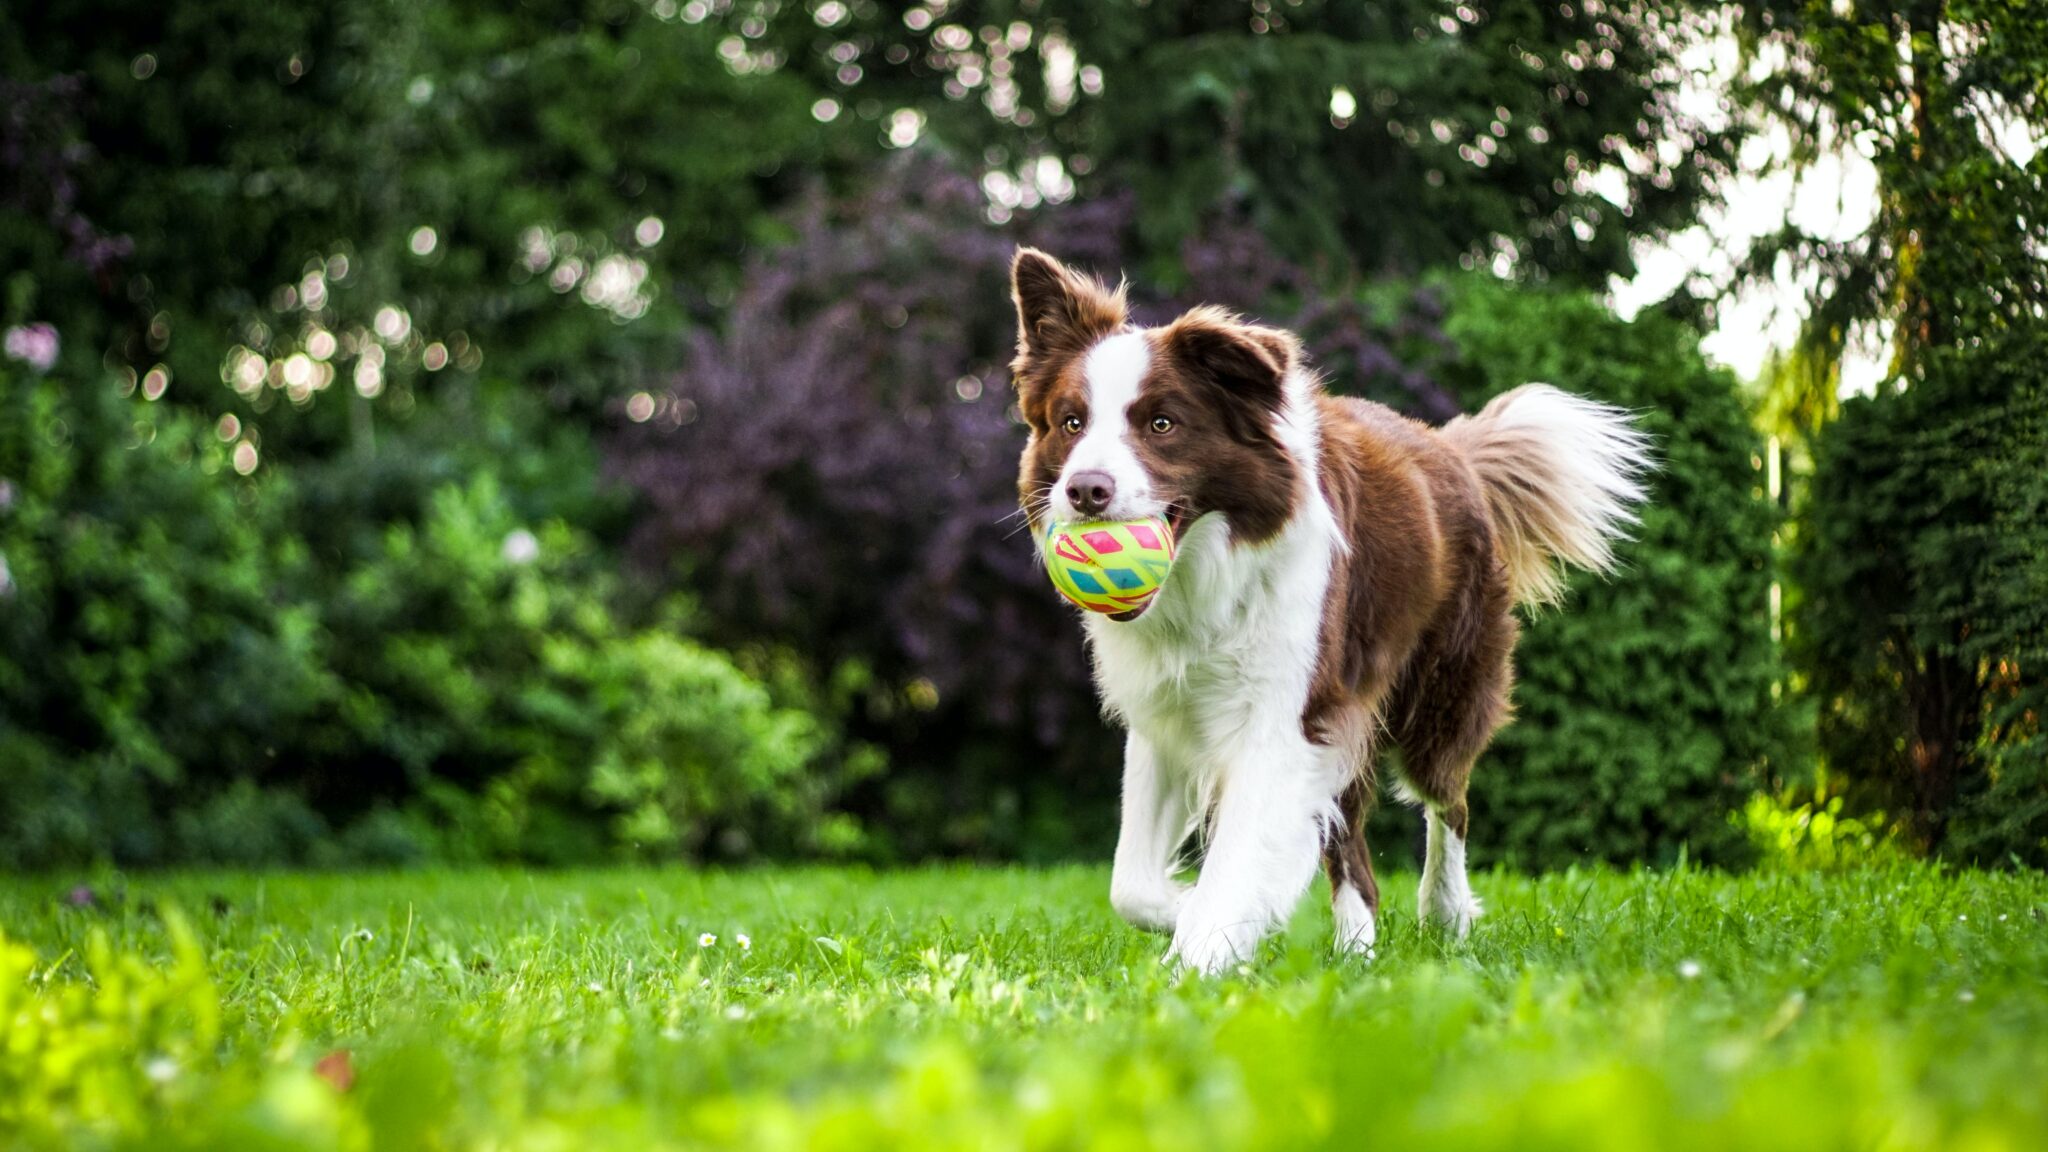 tan dog fetching a ball on grass
